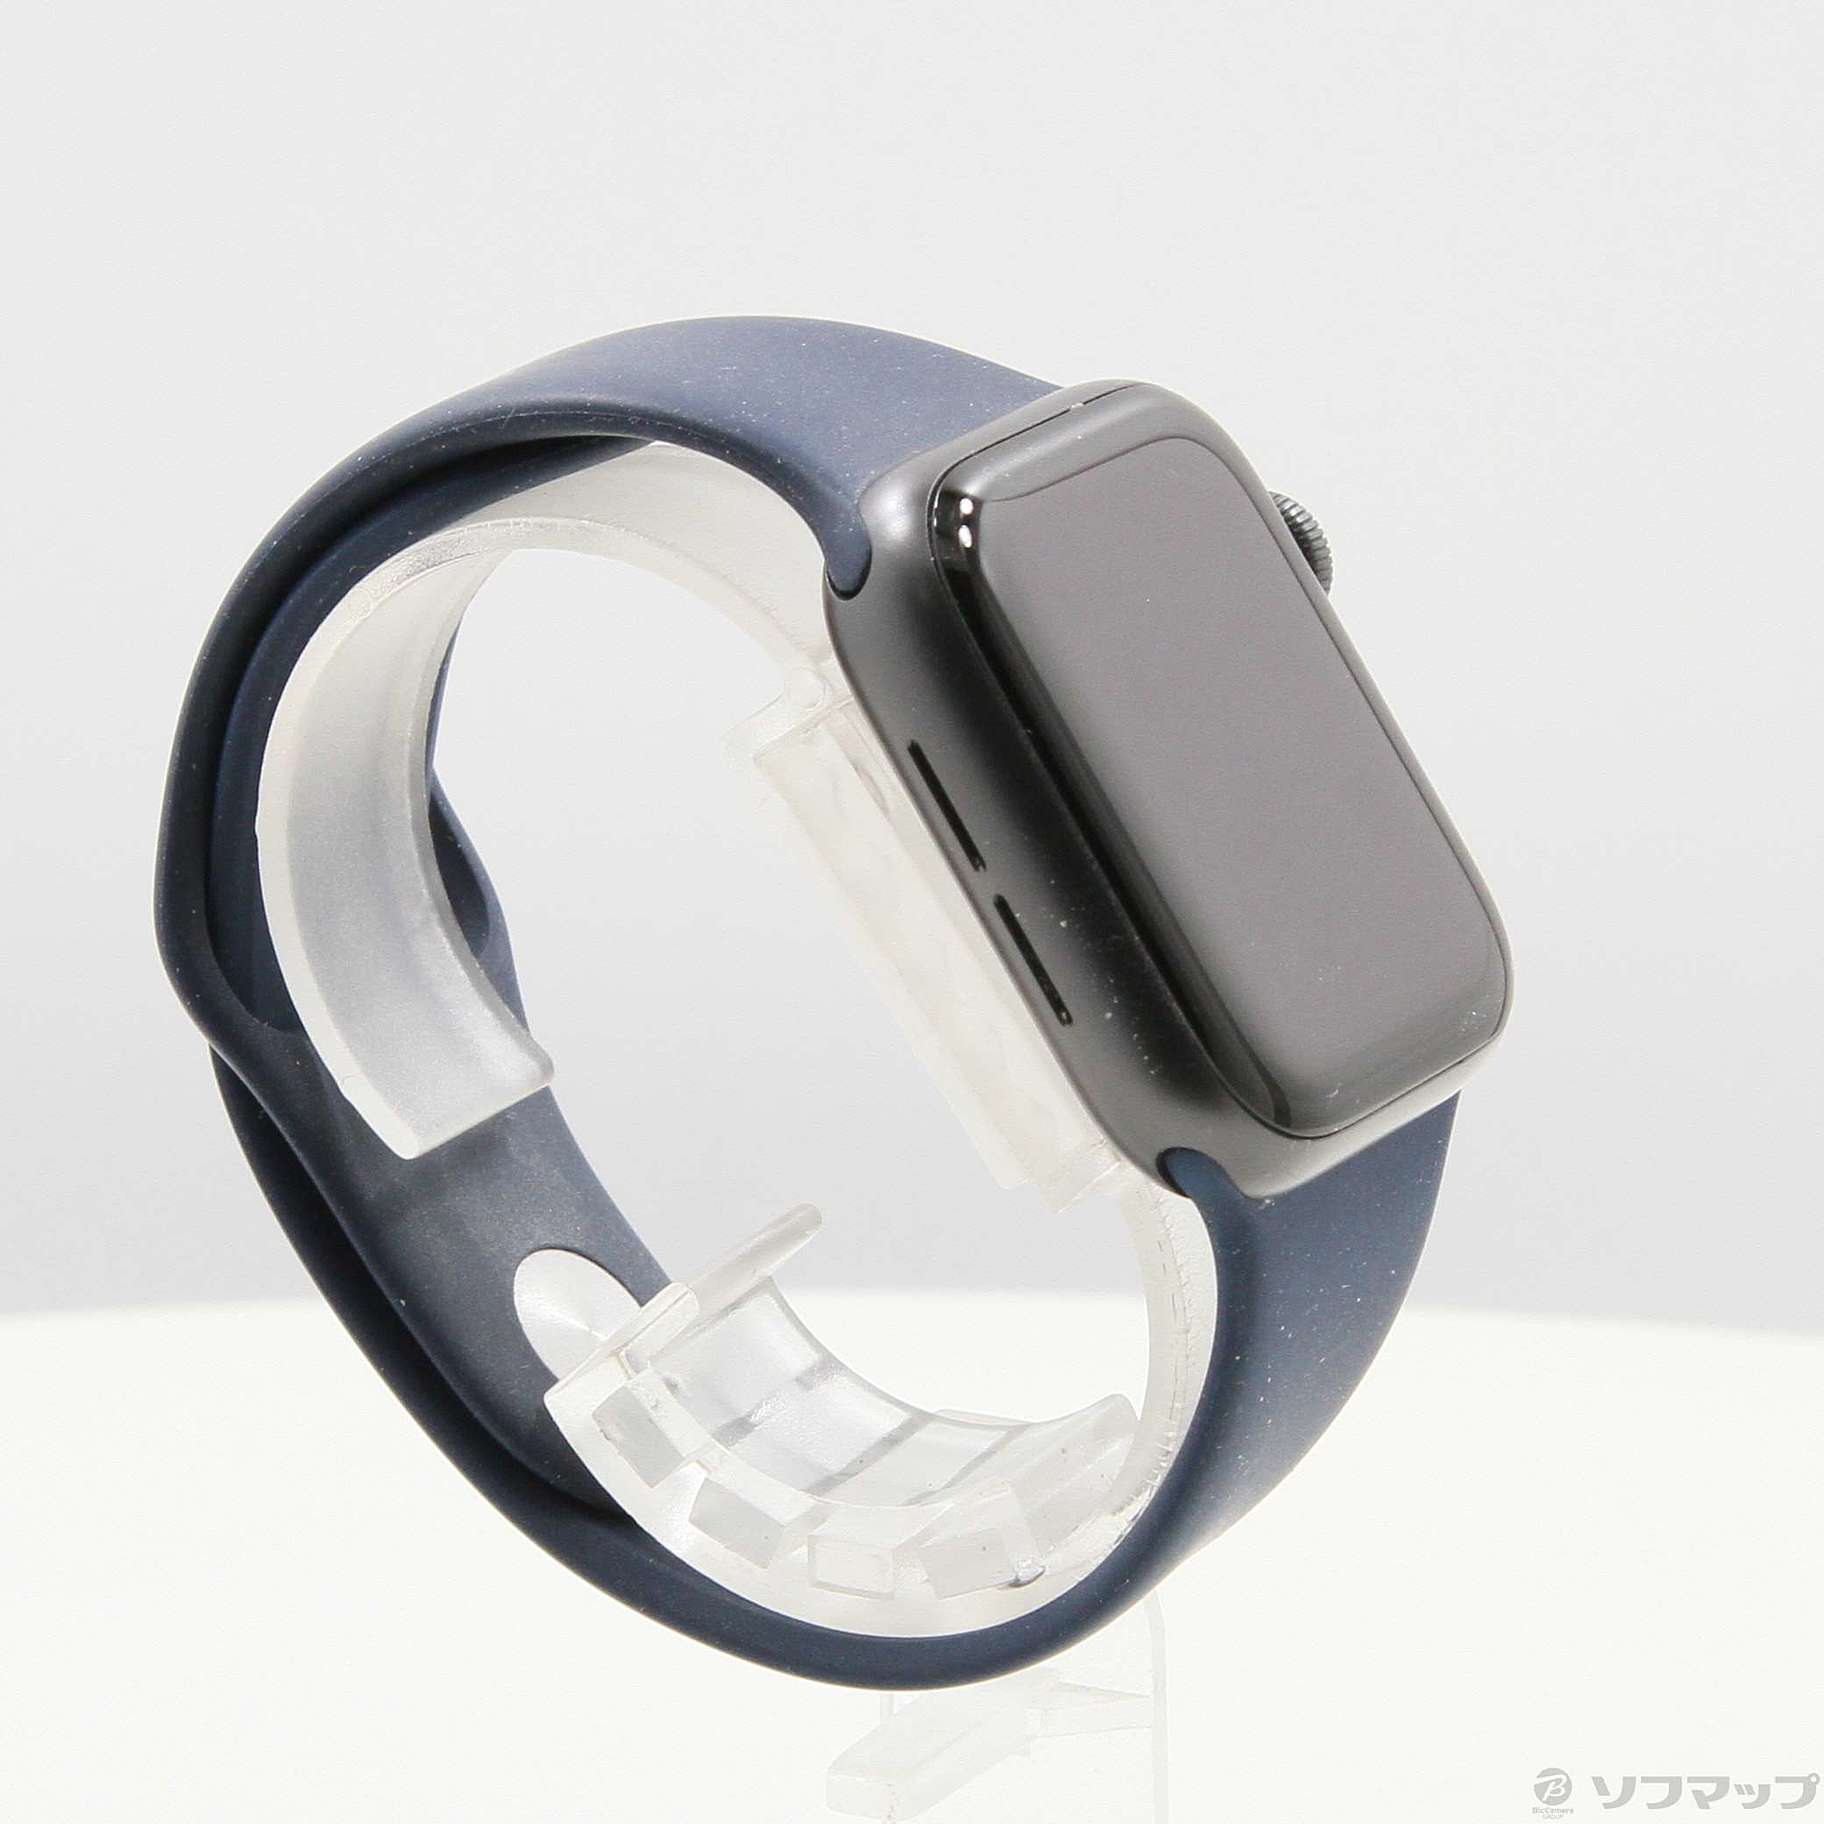 sakiko様専用】Apple Watch4 スペースグレー 40mm-